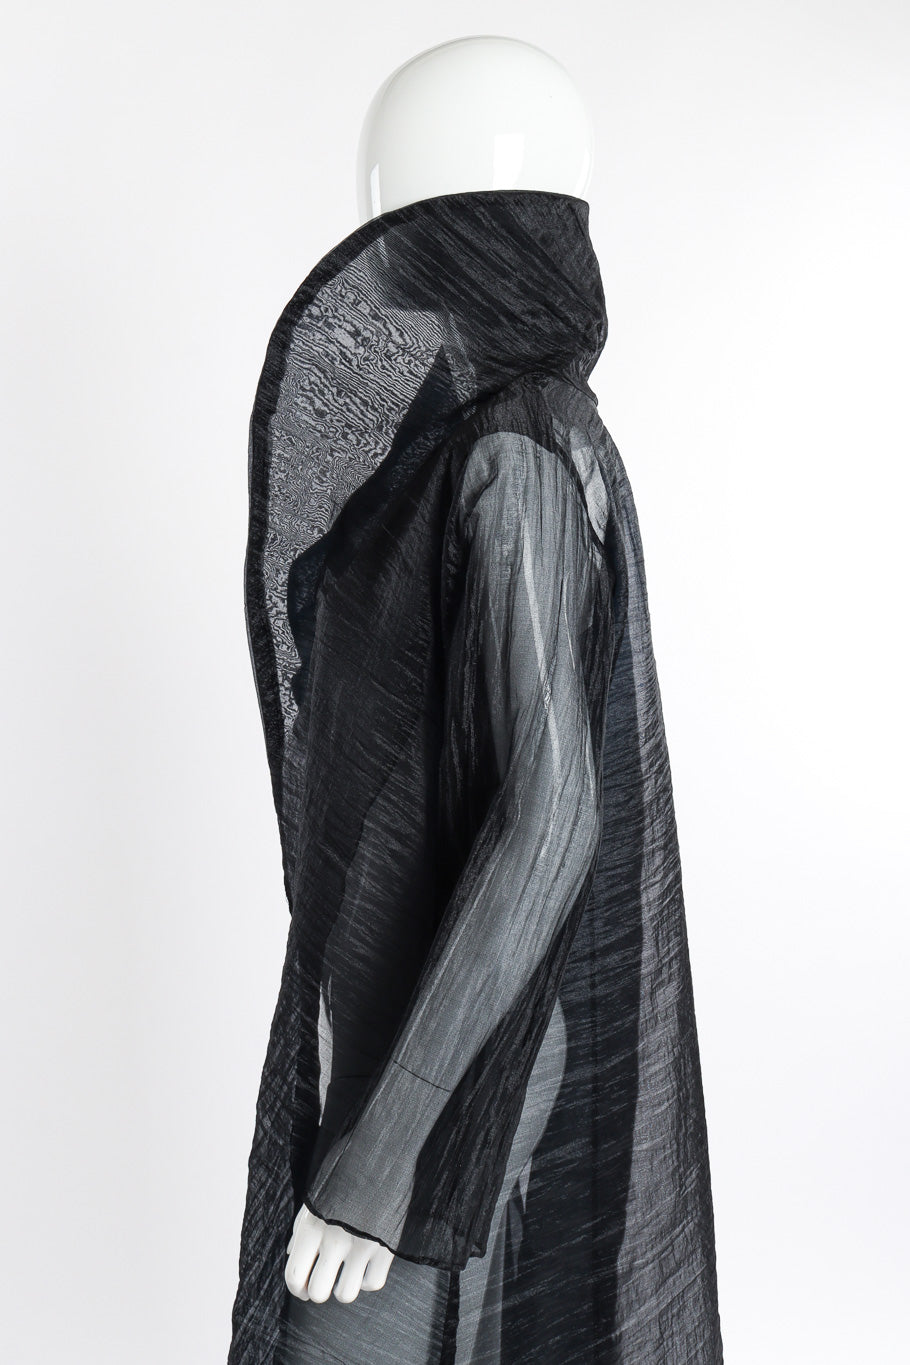 Silk duster by Donna Karan on mannequin collar up @recessla